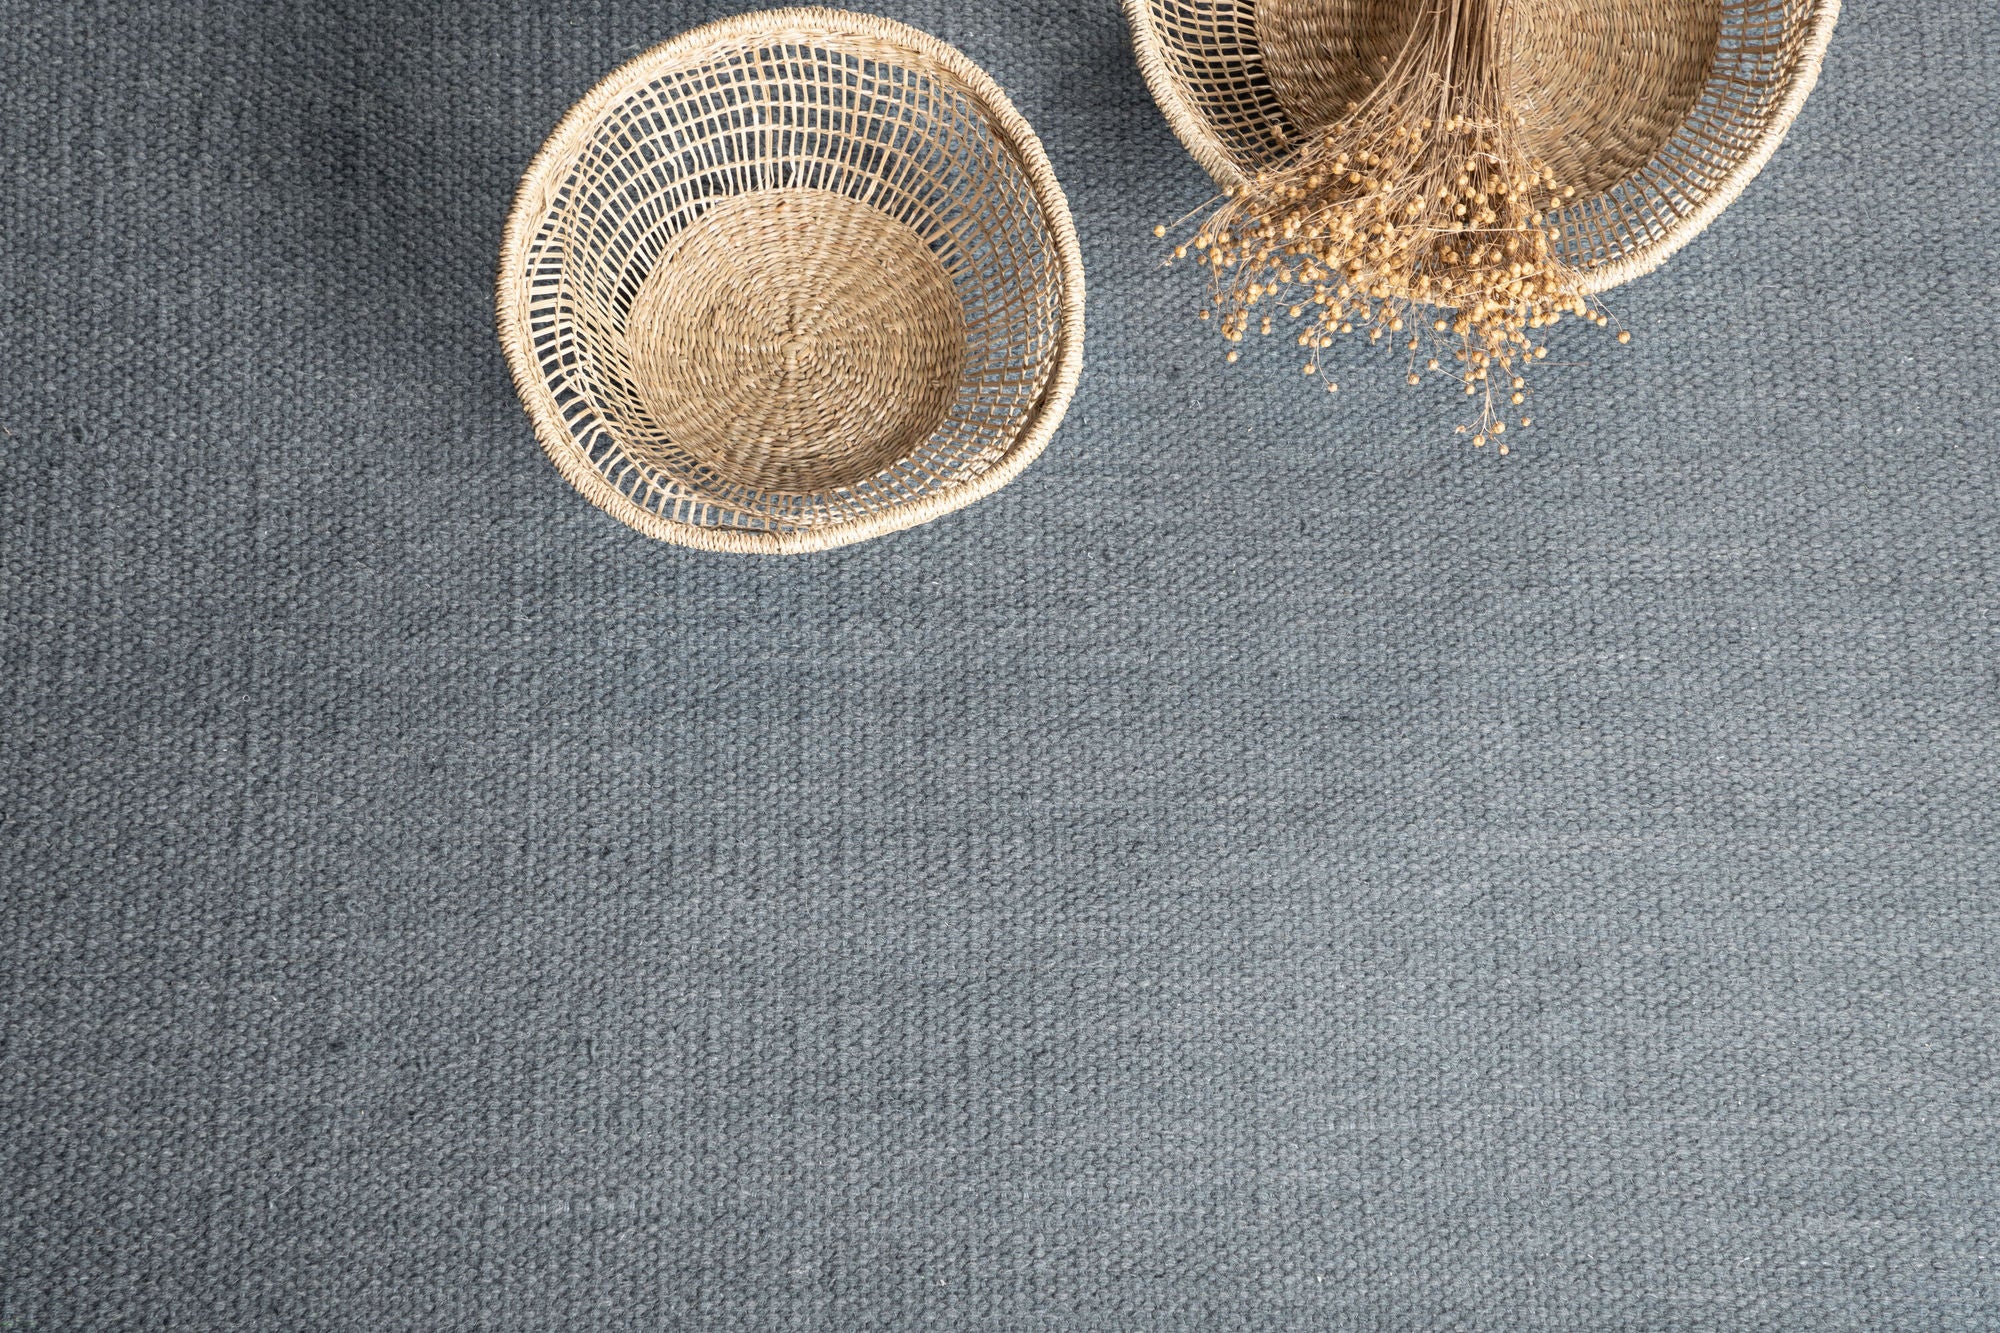 Venture Home Jaipur Wool Carpet - 170*240 - Navy Blue